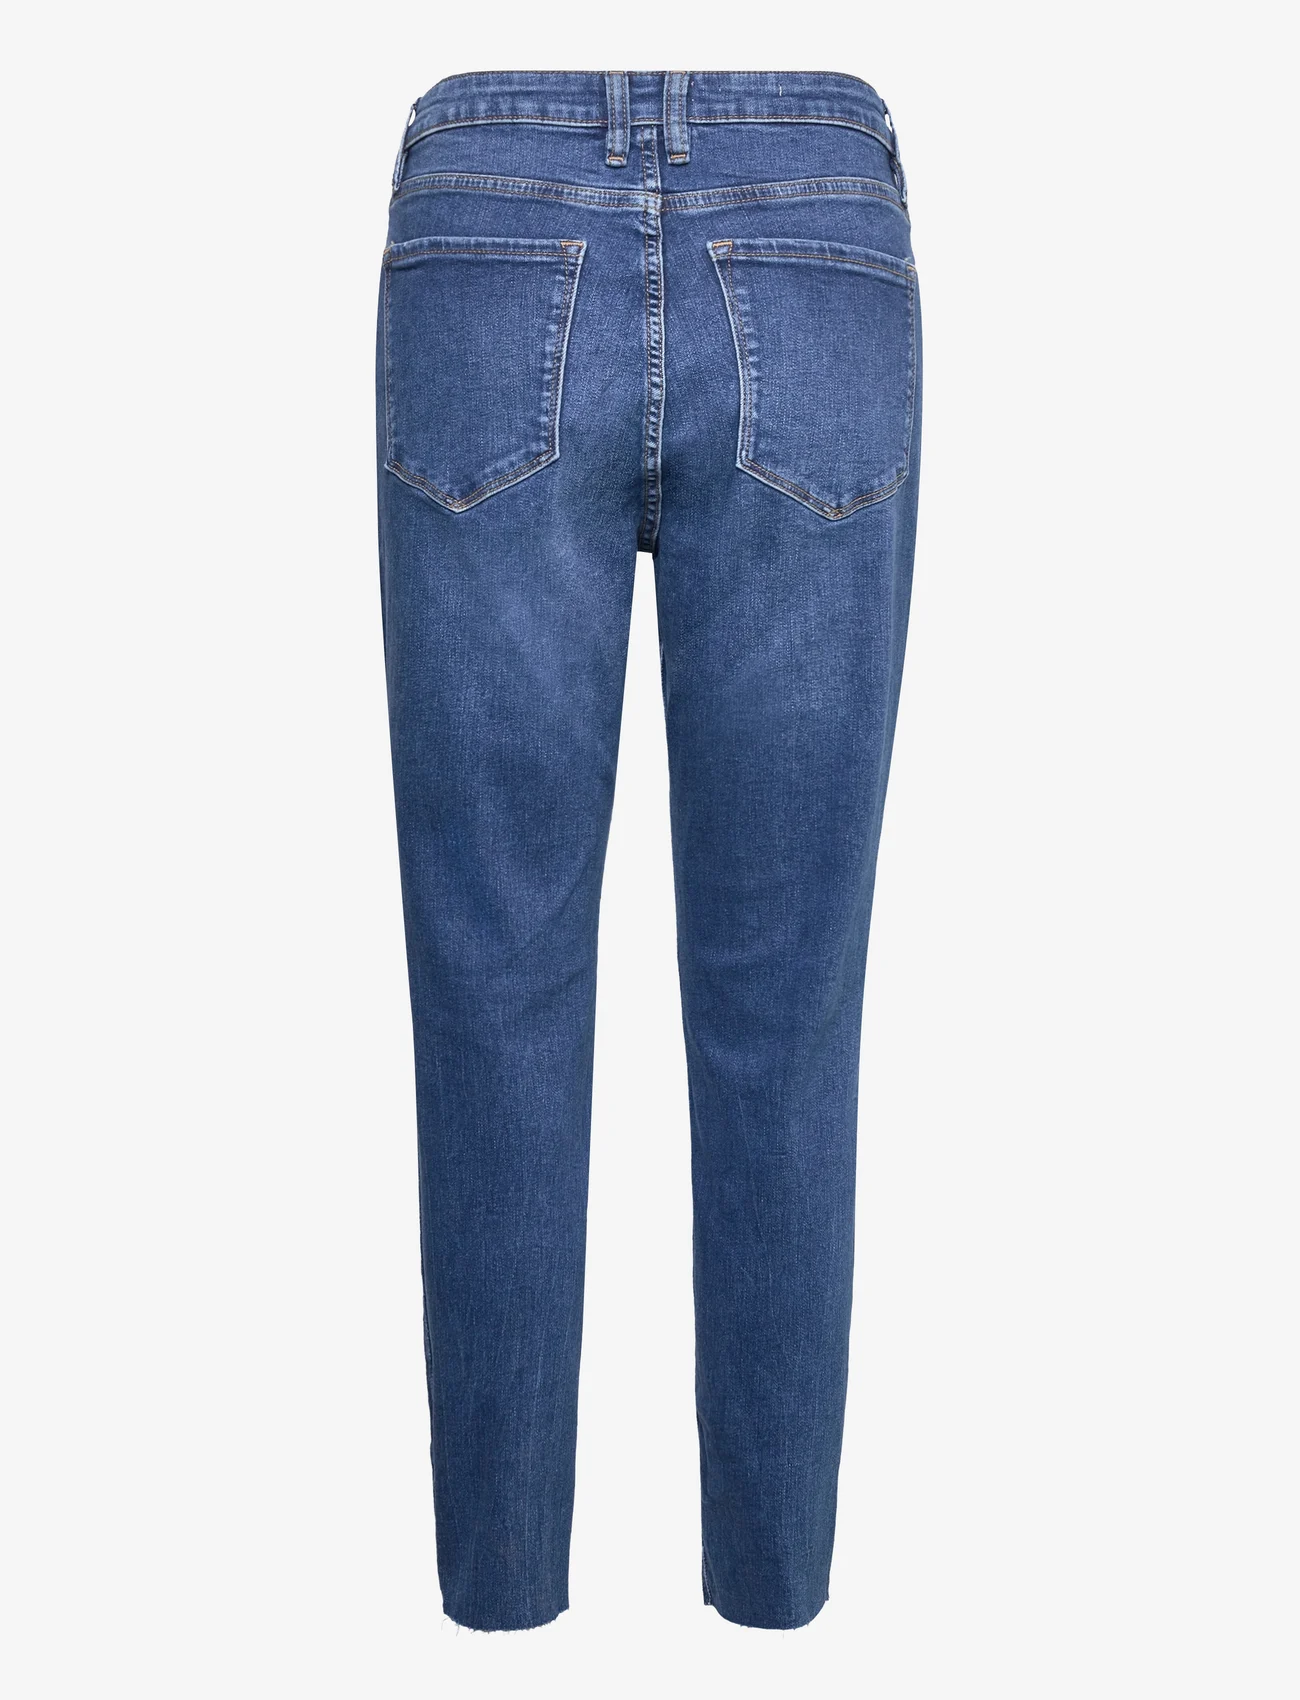 Mango - Skinny cropped jeans - mom jeans - open blue - 1